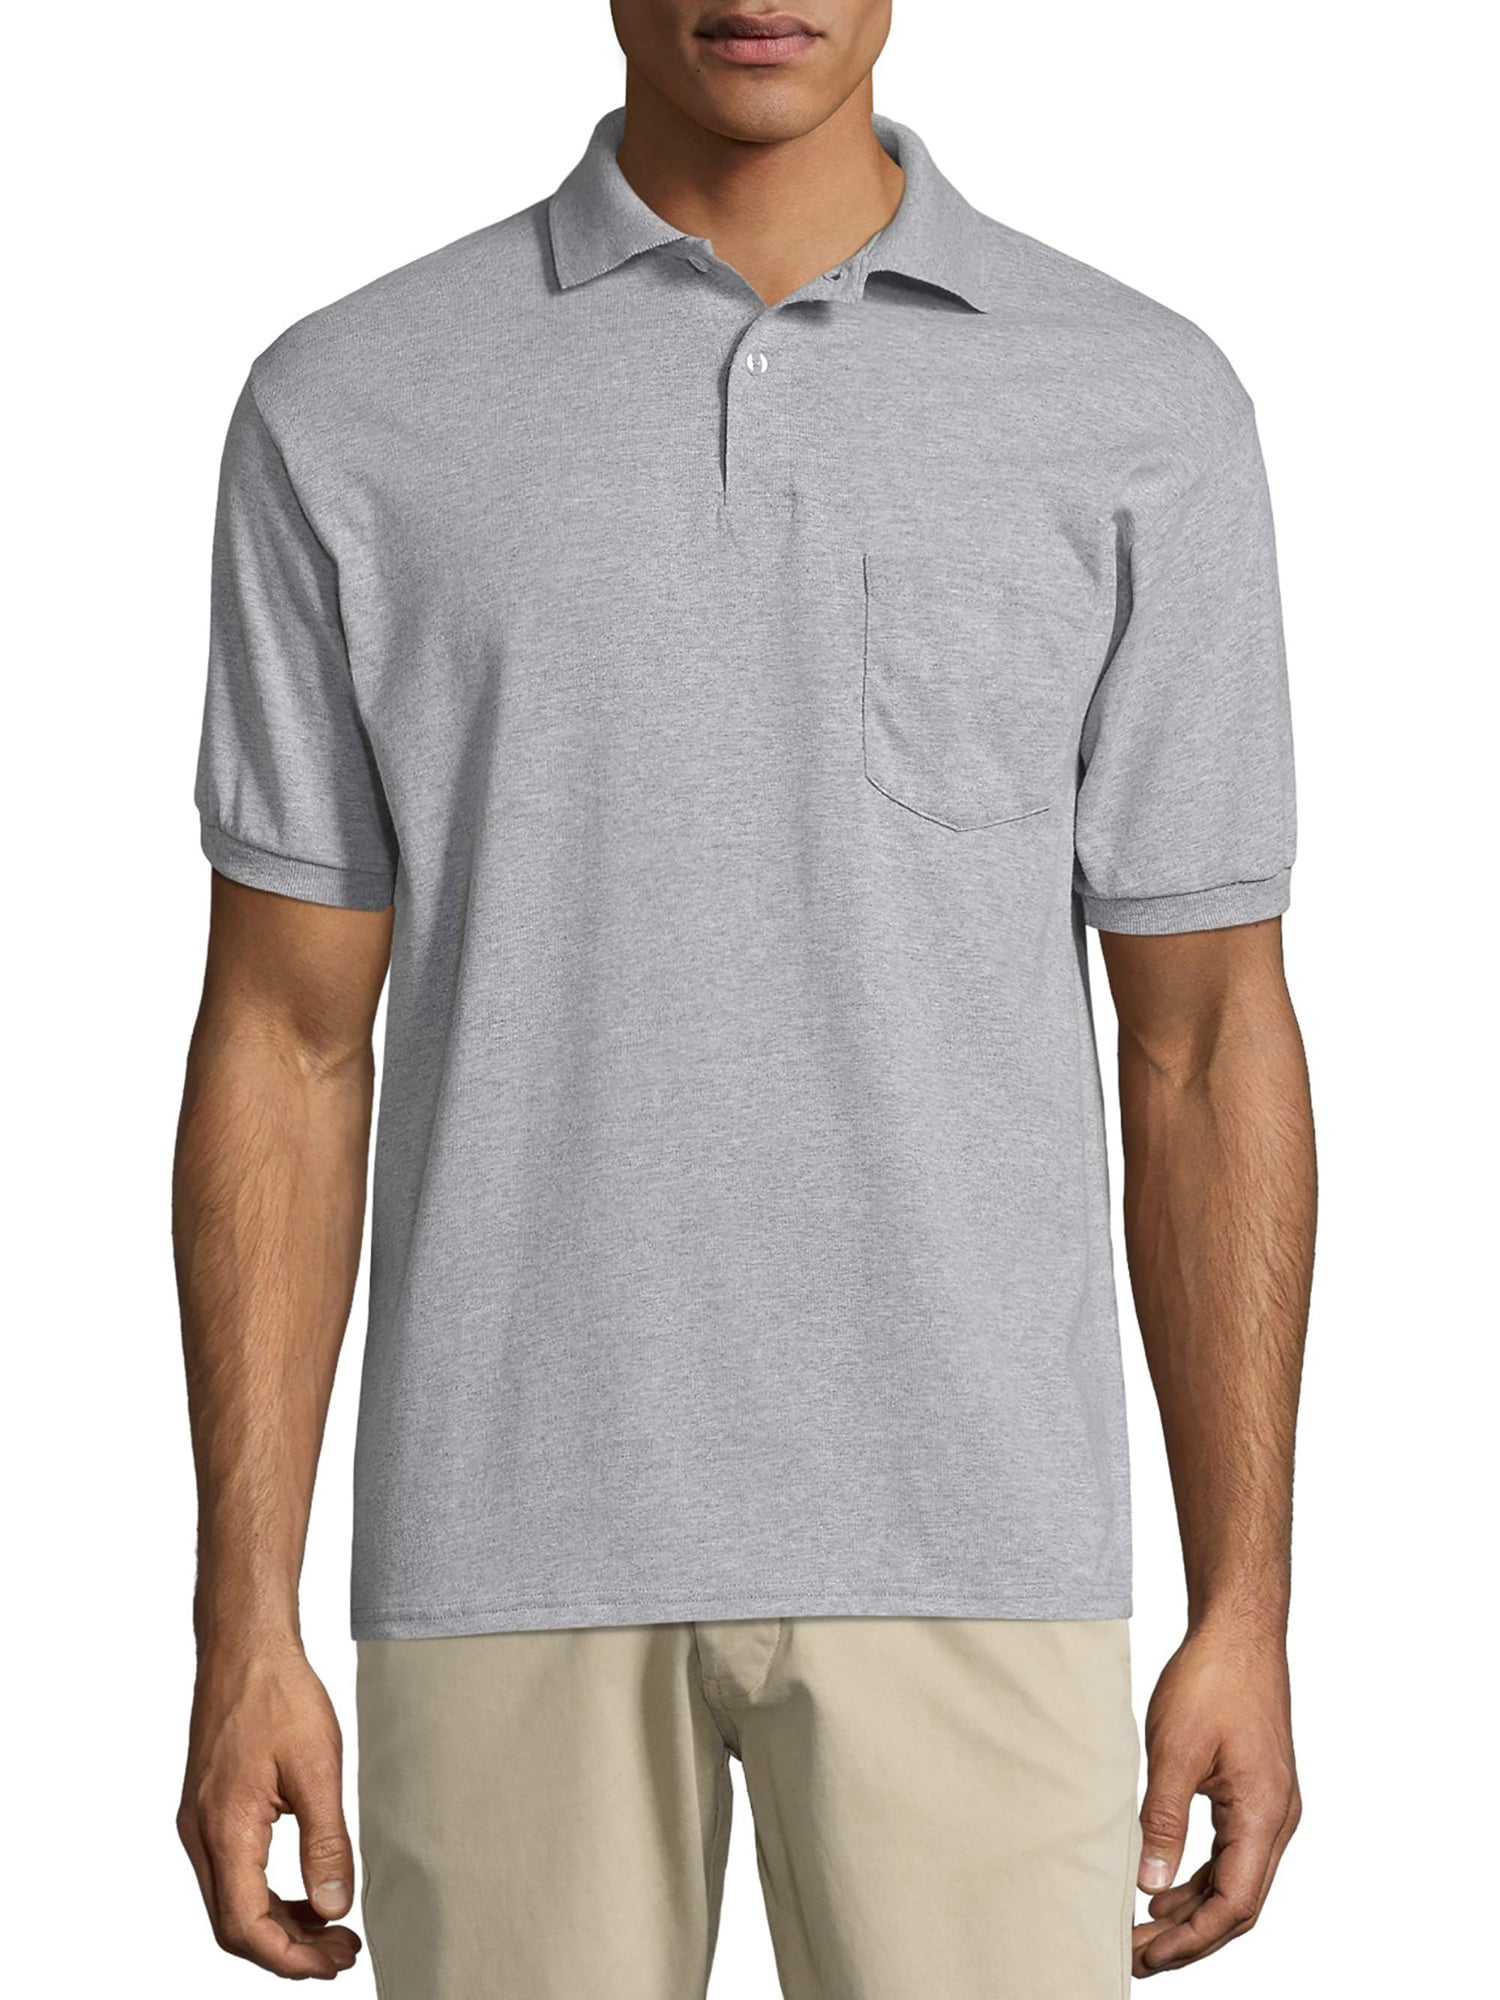 Hanes Men's Ecosmart Jersey Polo Shirt with Pocket - Walmart.com